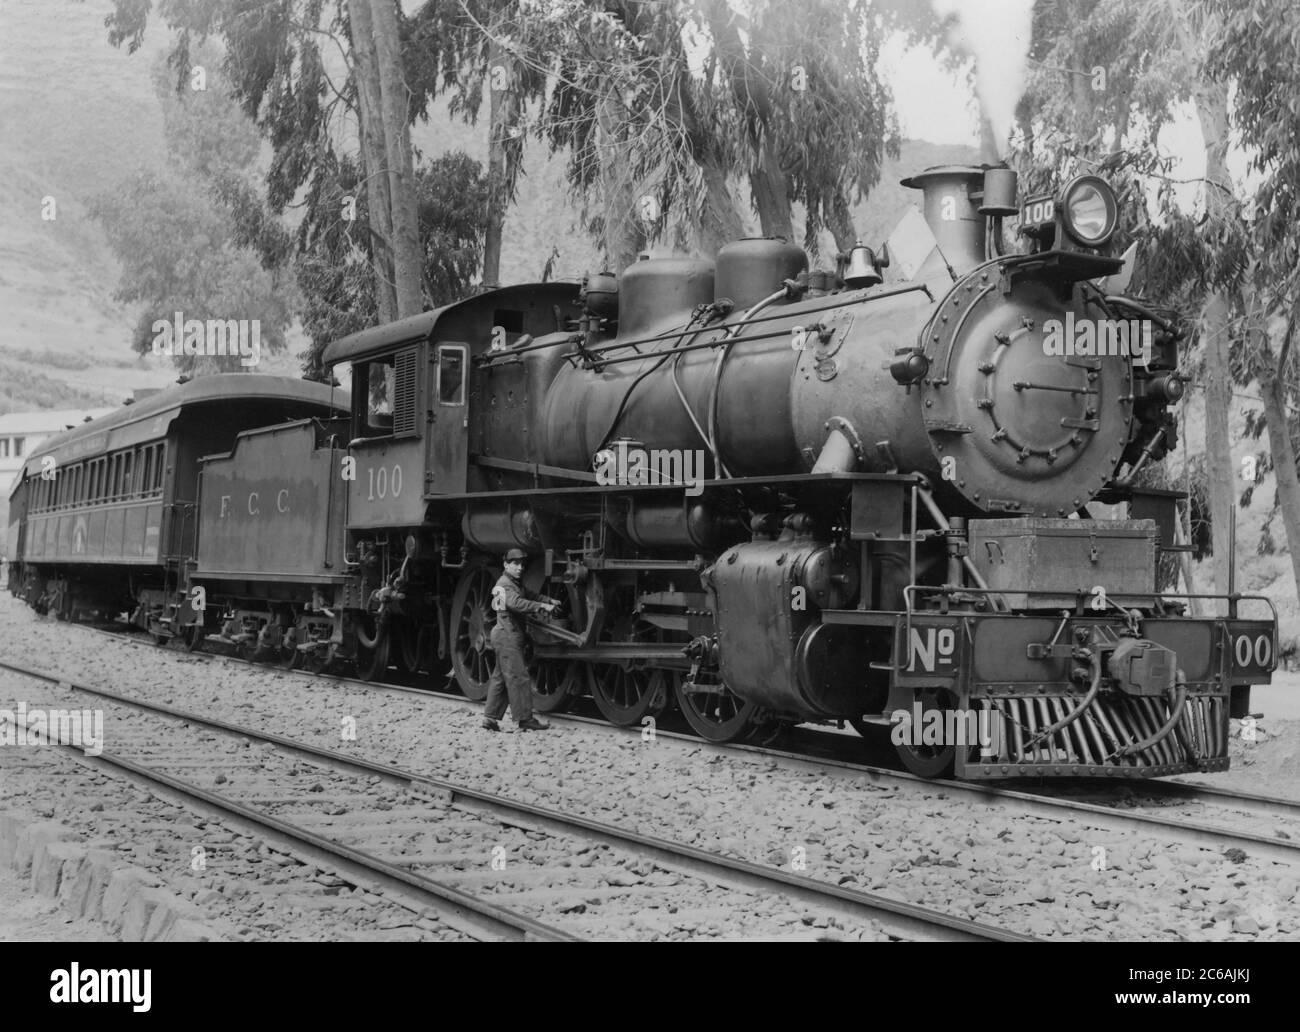 Andes Class 2-8-0 No 100 steam locomotive of Central Railway (FCC), Peru, South America. Stock Photo